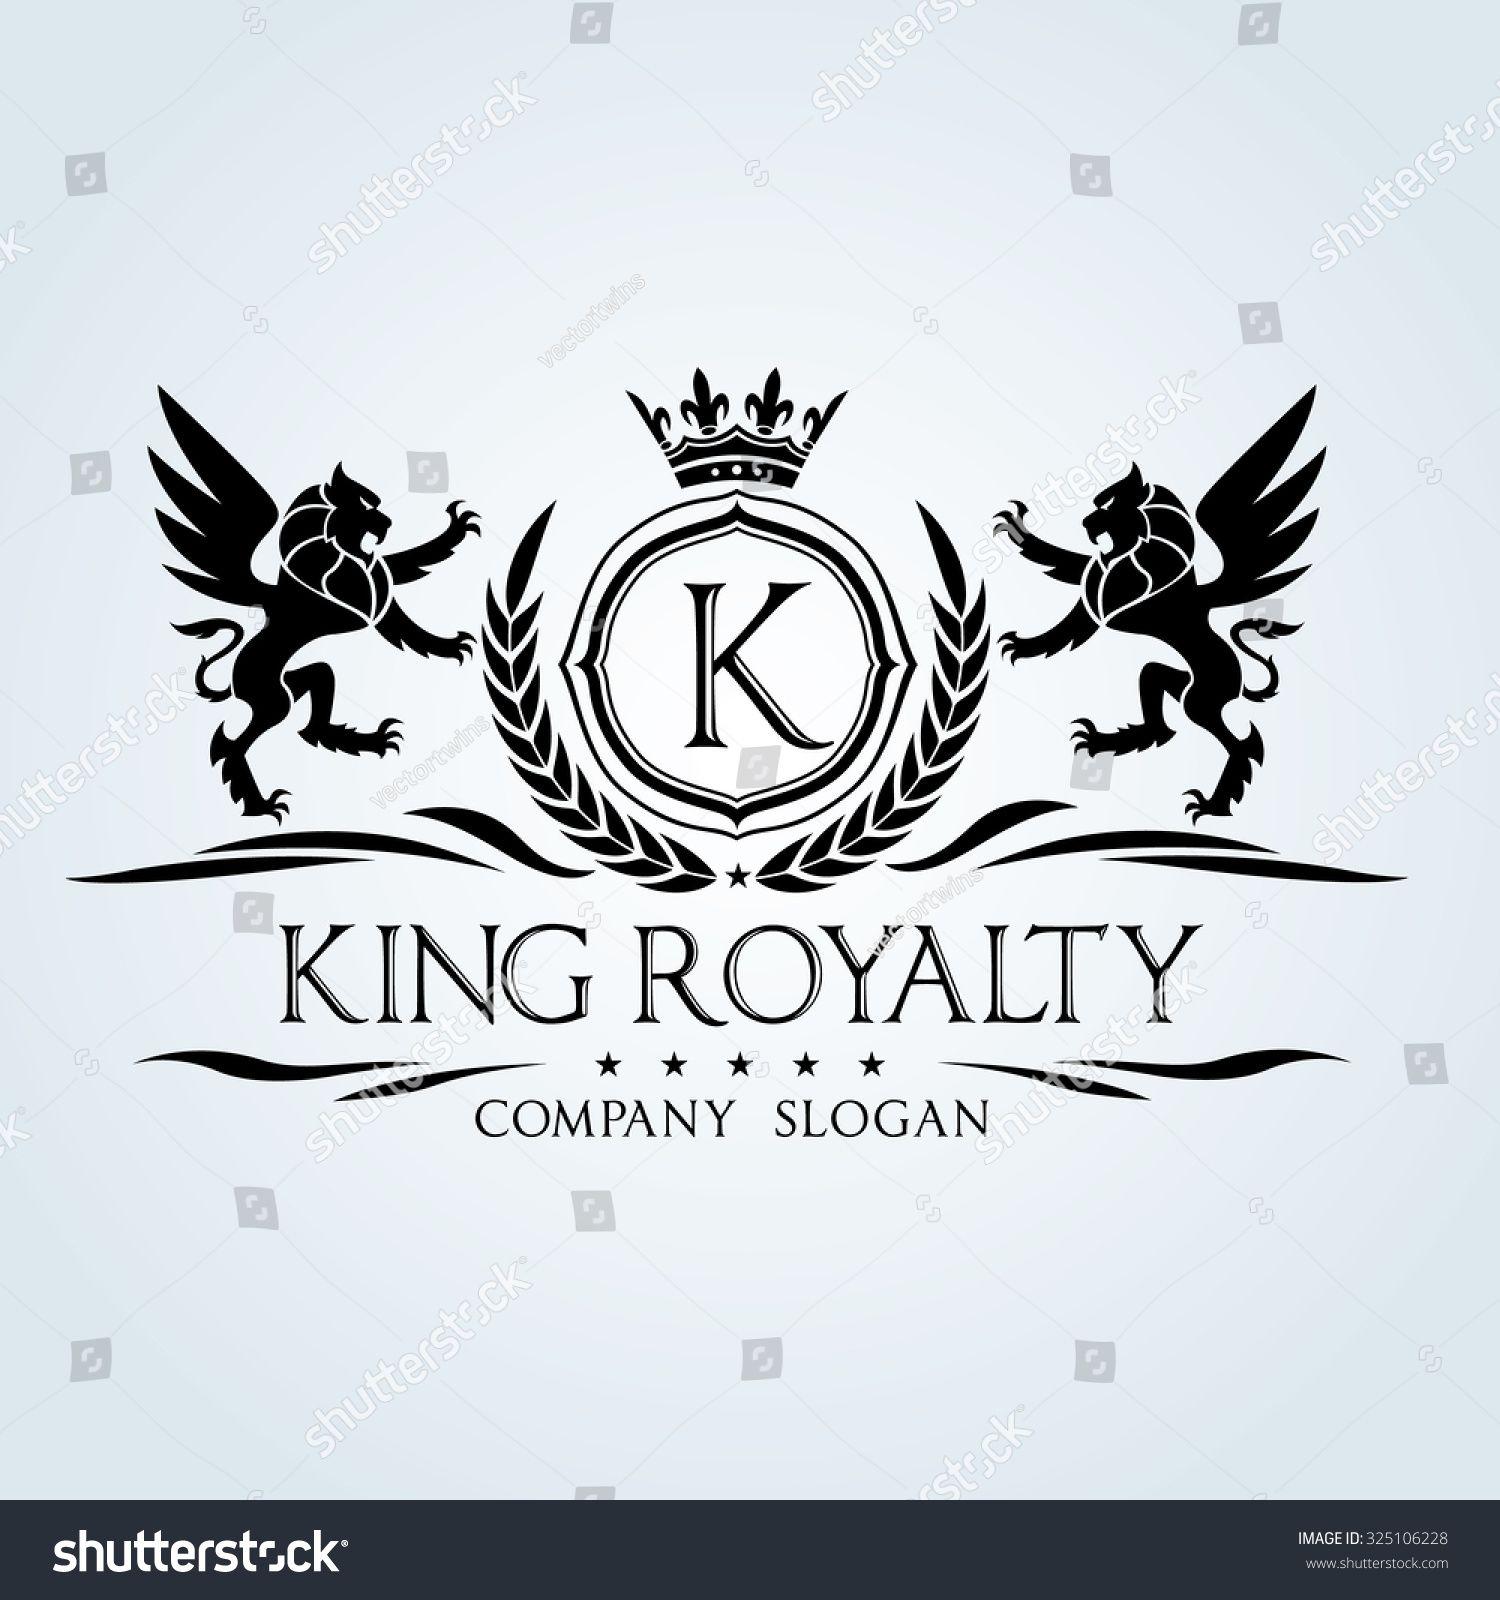 Royalty Logo - King Royalty,boutique brand,real estate,property,royalty,crown logo ...